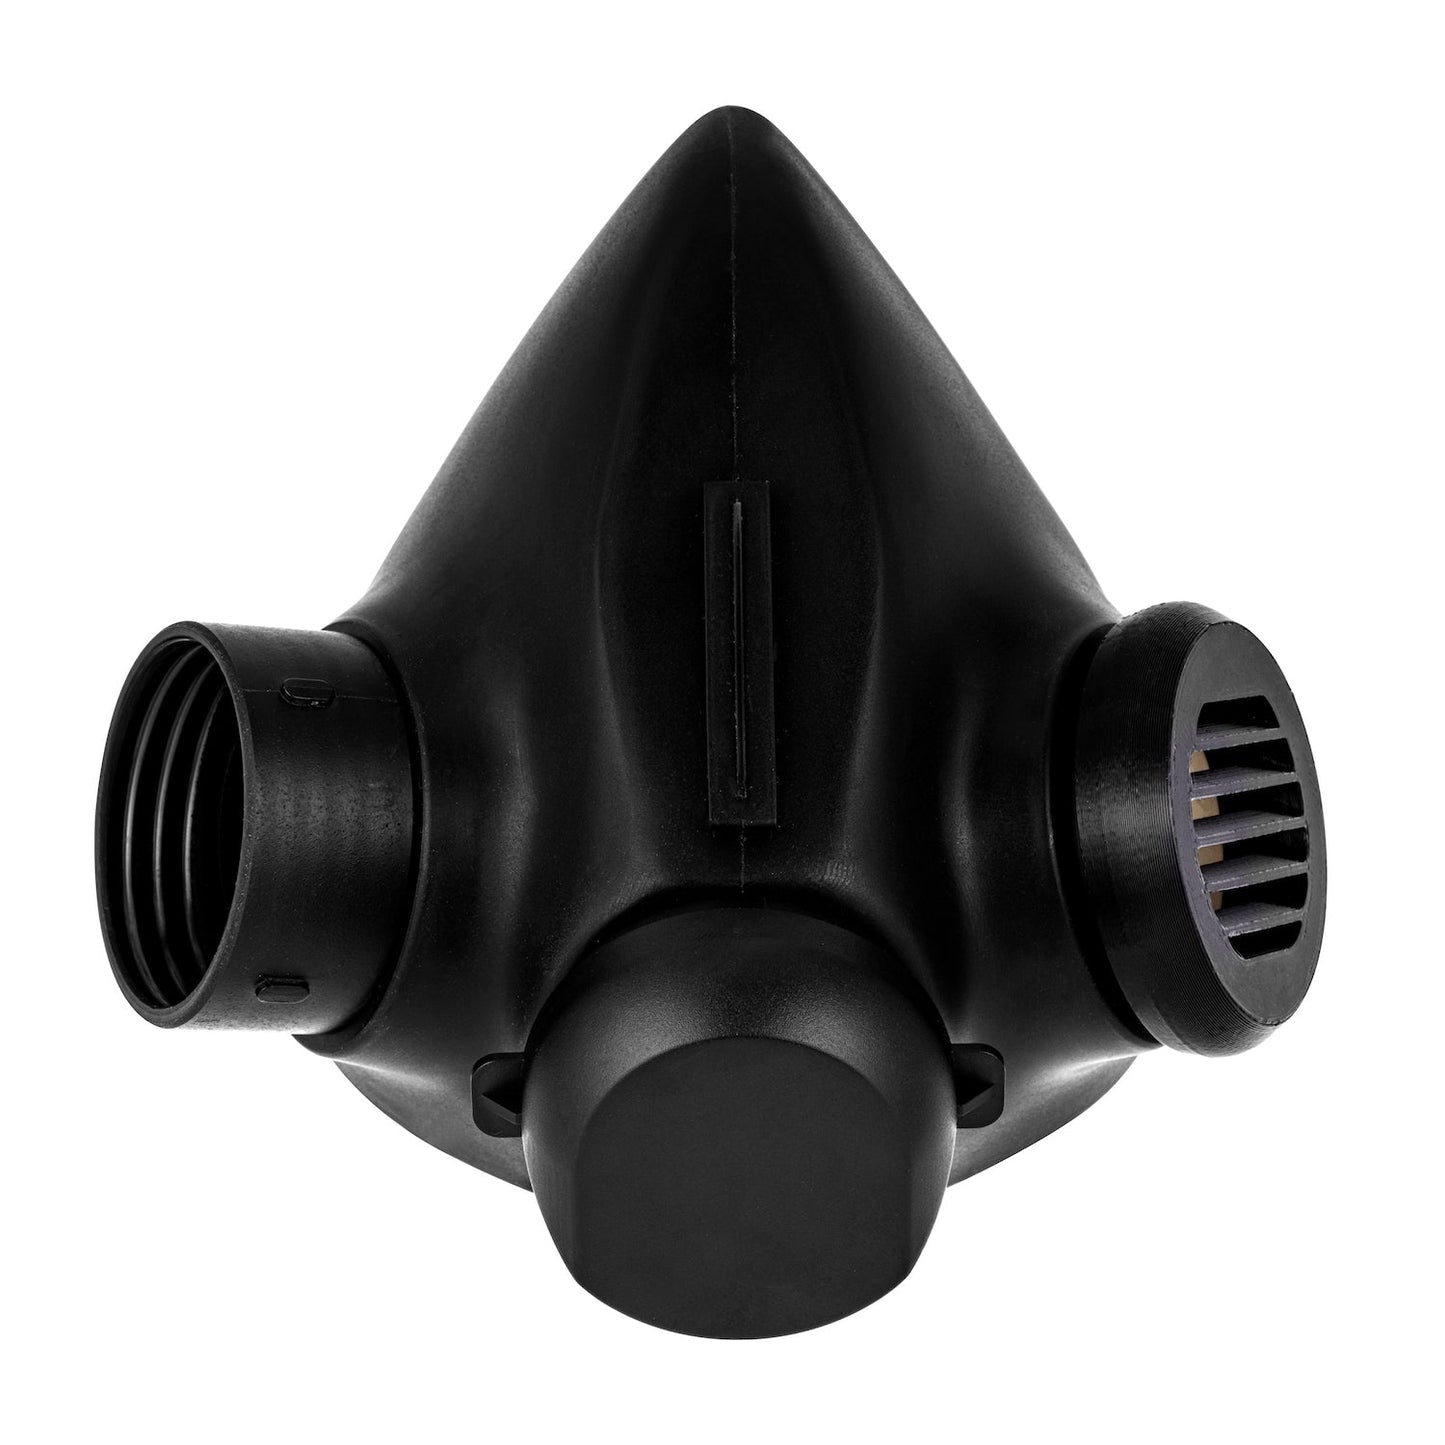 Tactical Air-Purifying Respirator Mask (TAPR)